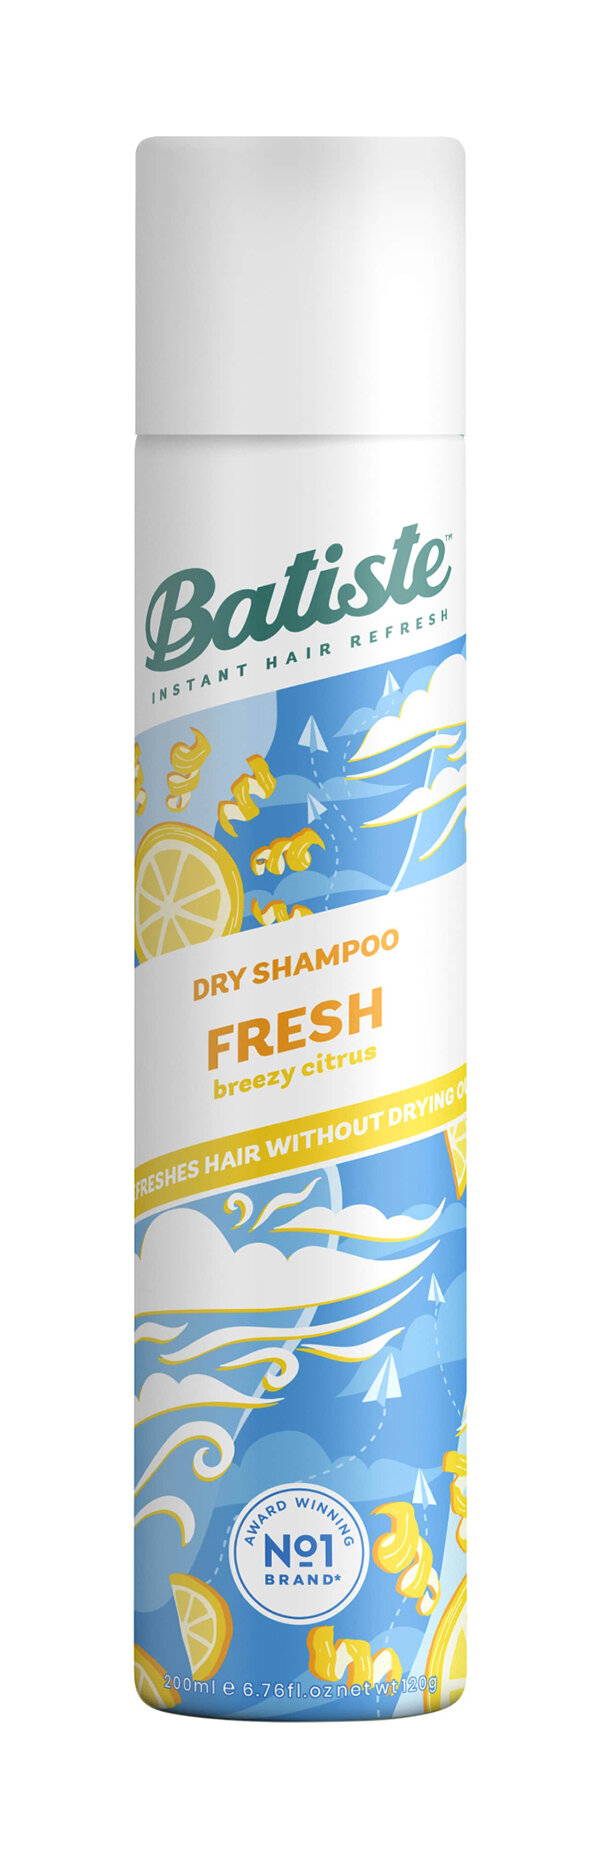 Сухой шампунь со свежим ароматом Batiste Dry Shampoo Fresh 200 мл .